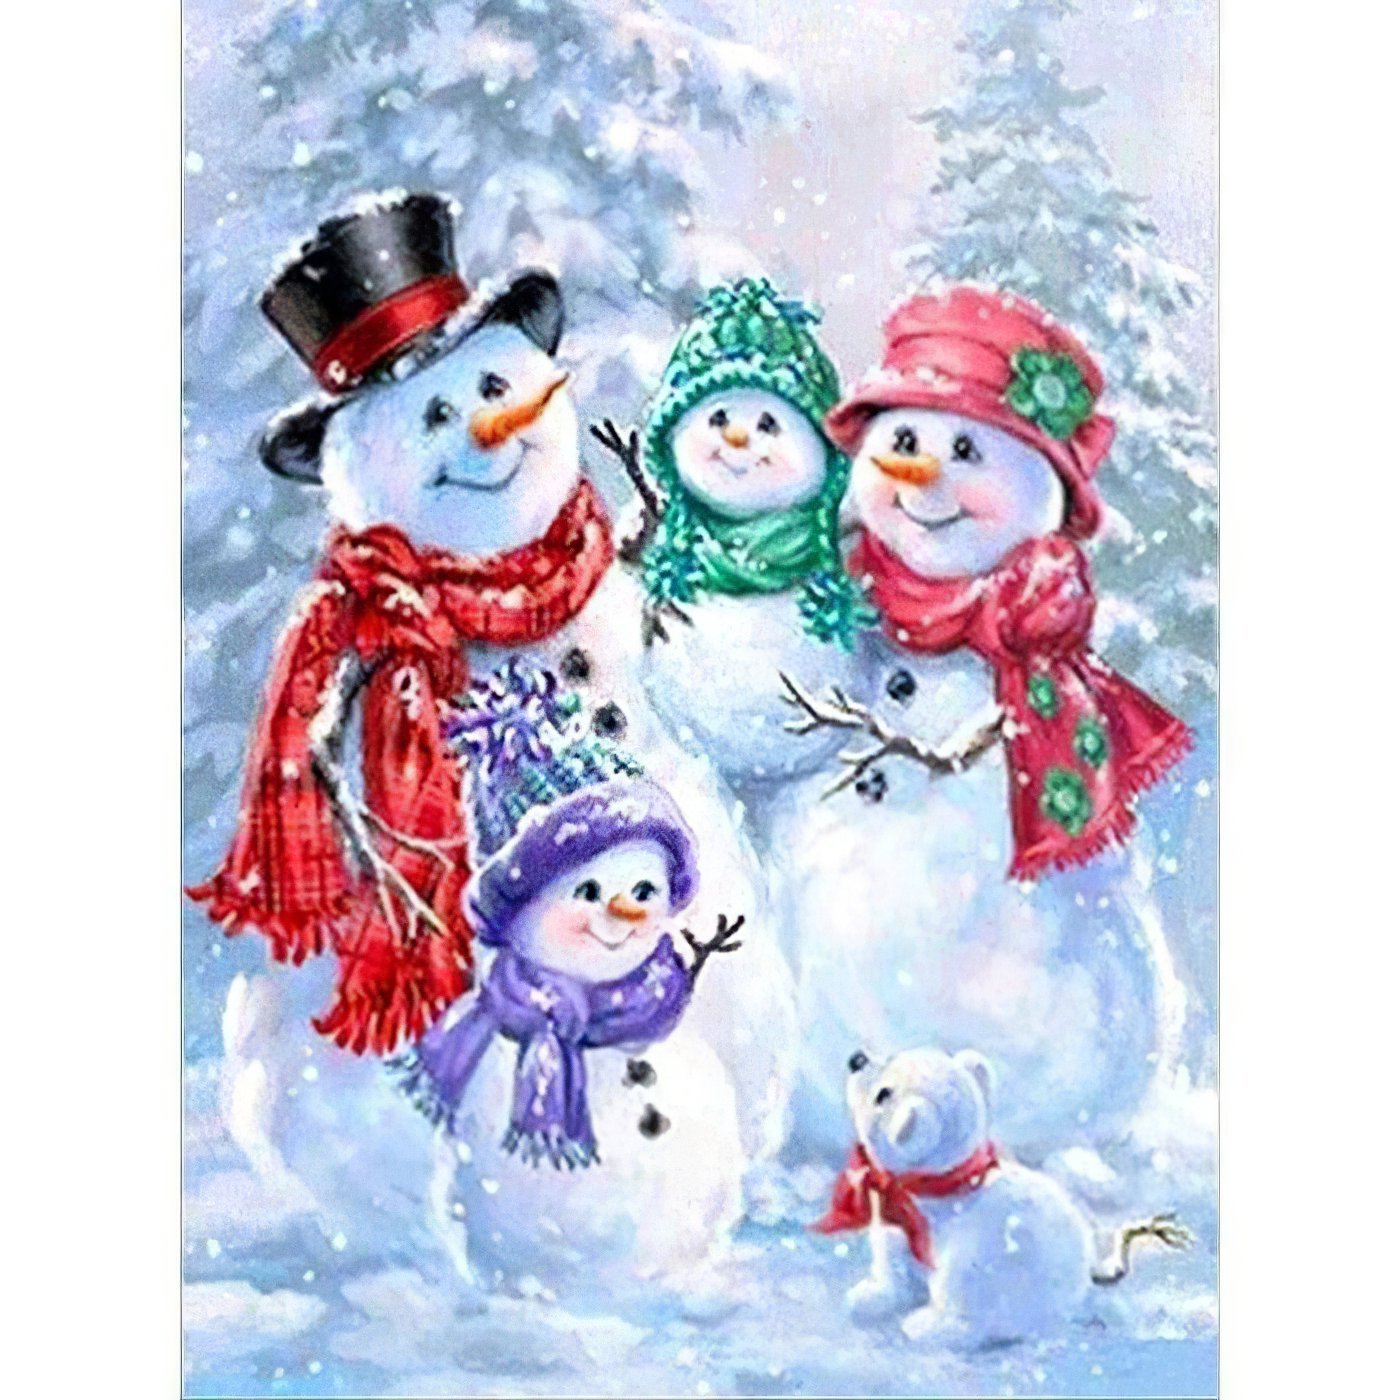 Celebrate winter with a cheerful snowman family scene.Family Of Snowman - Diamondartlove